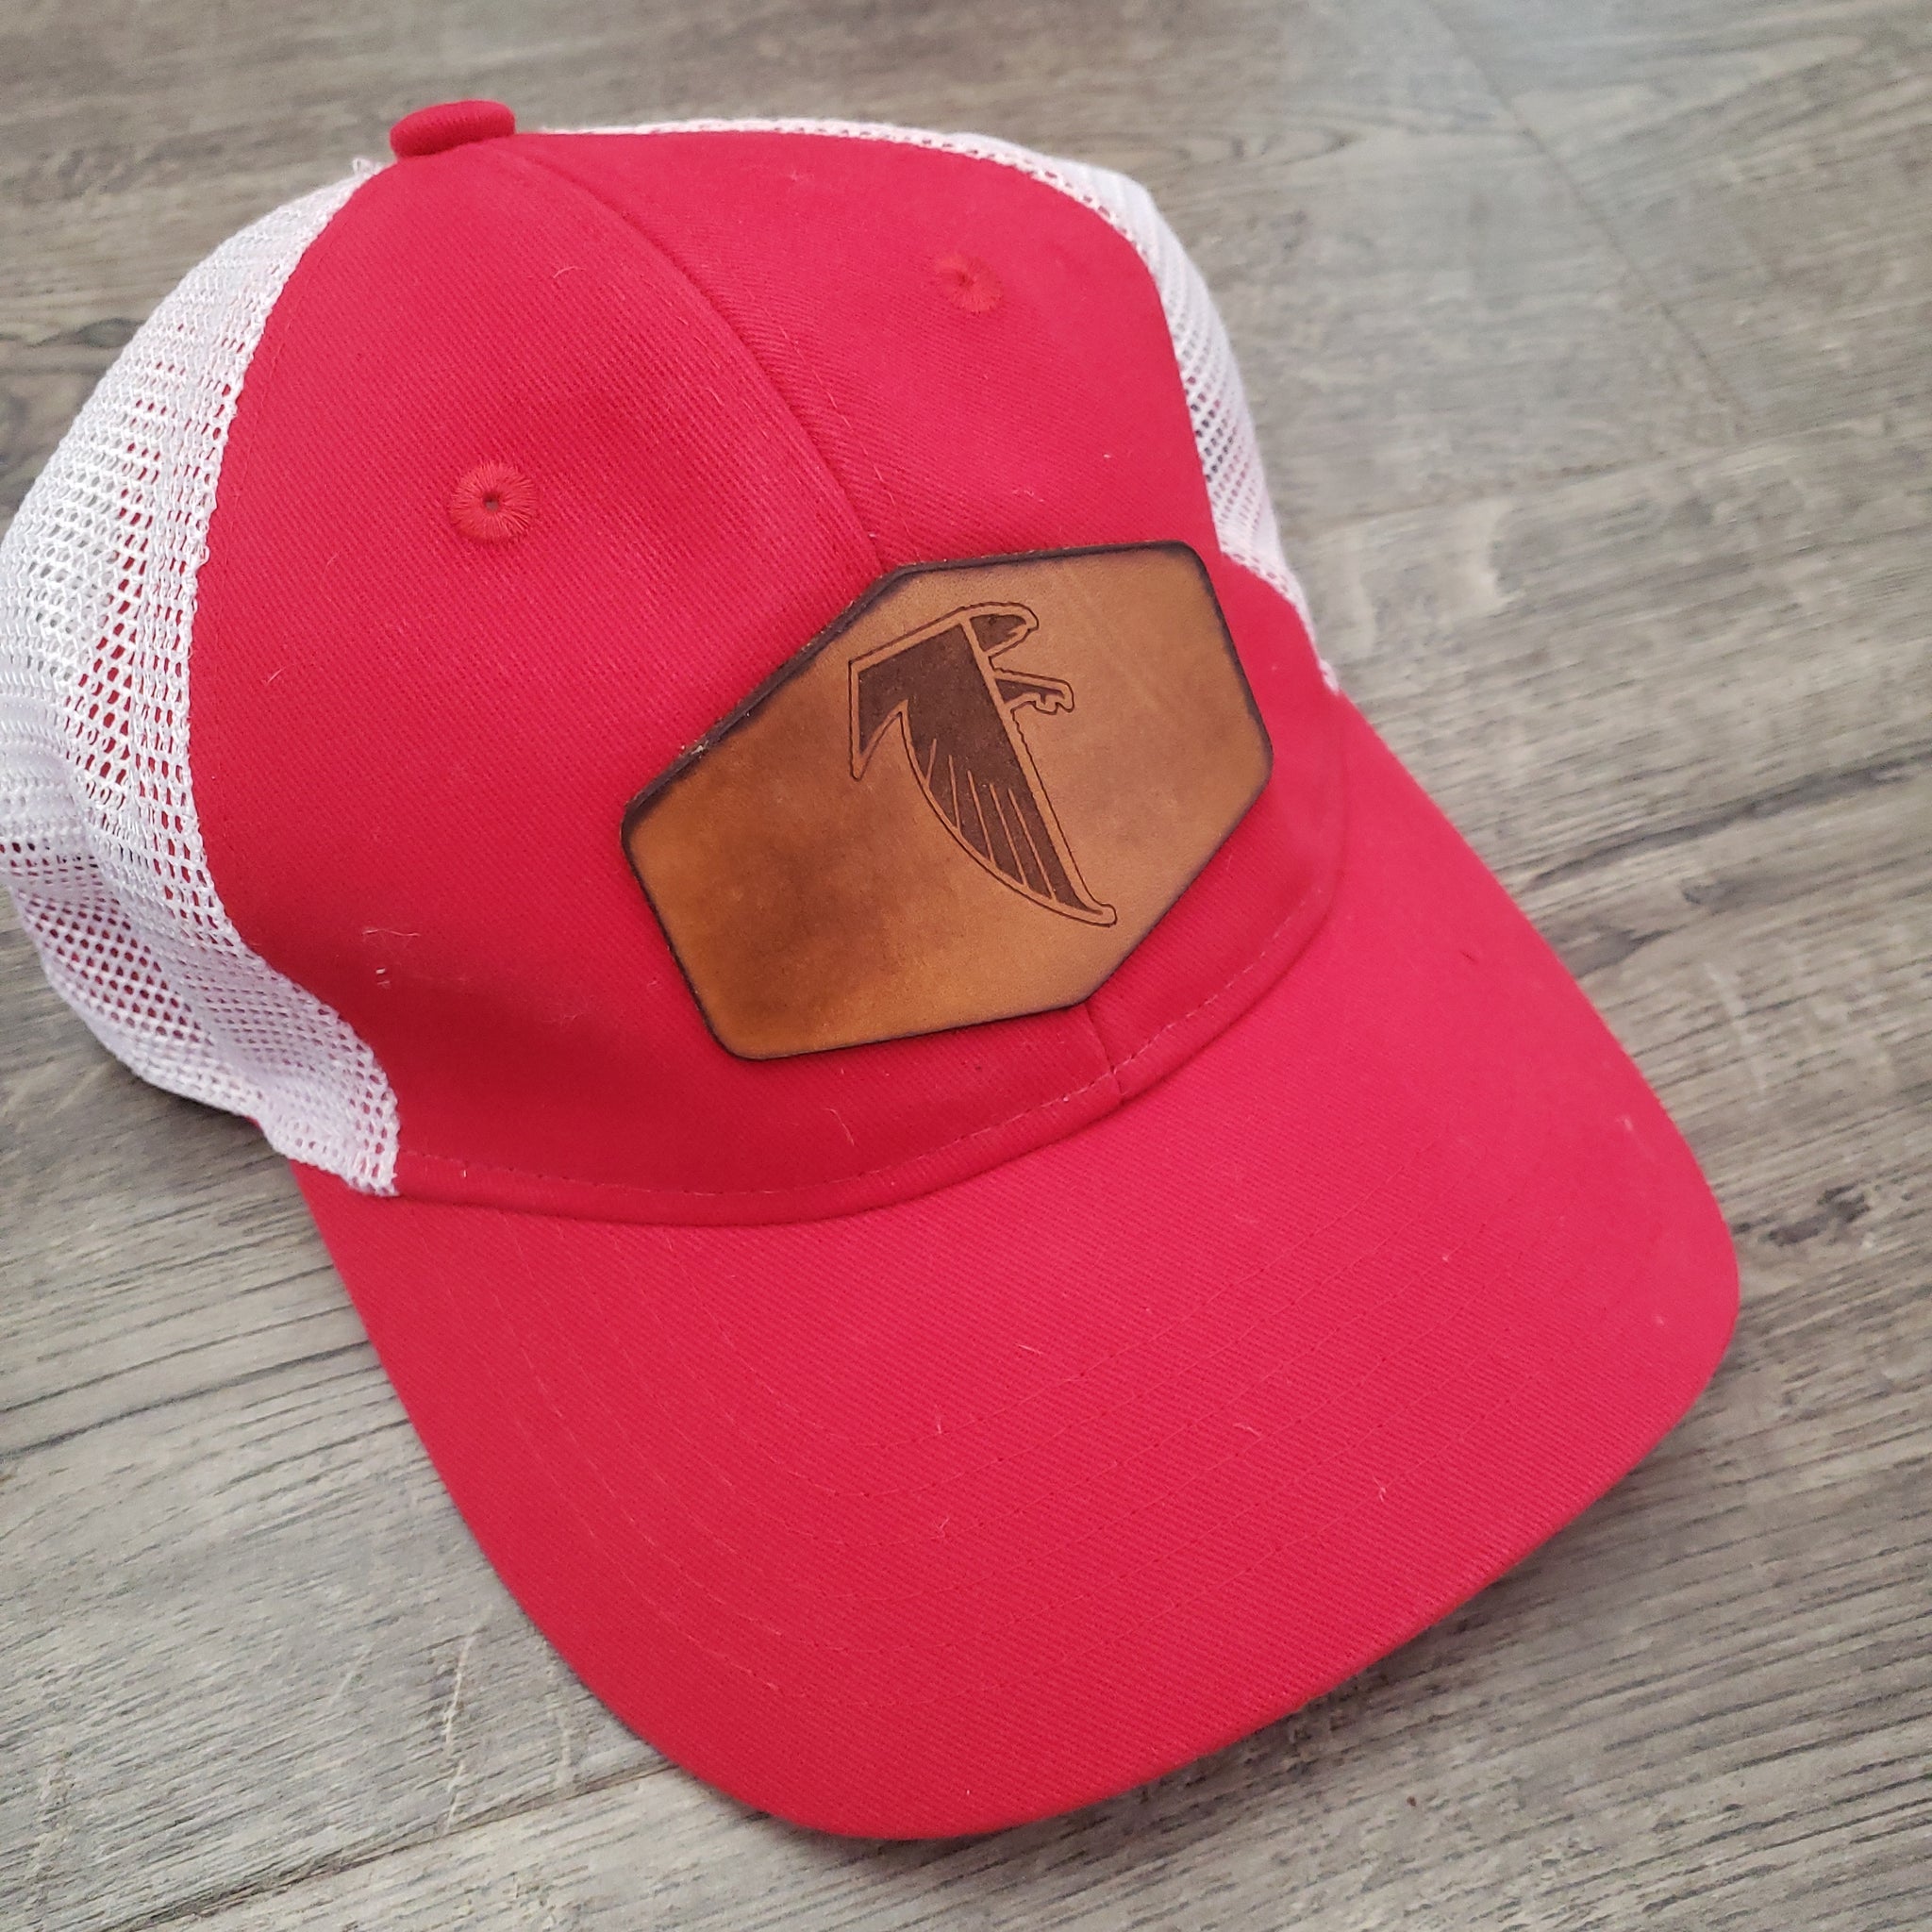 .Red Ladies Fit Ponytail back Falcons Cap.